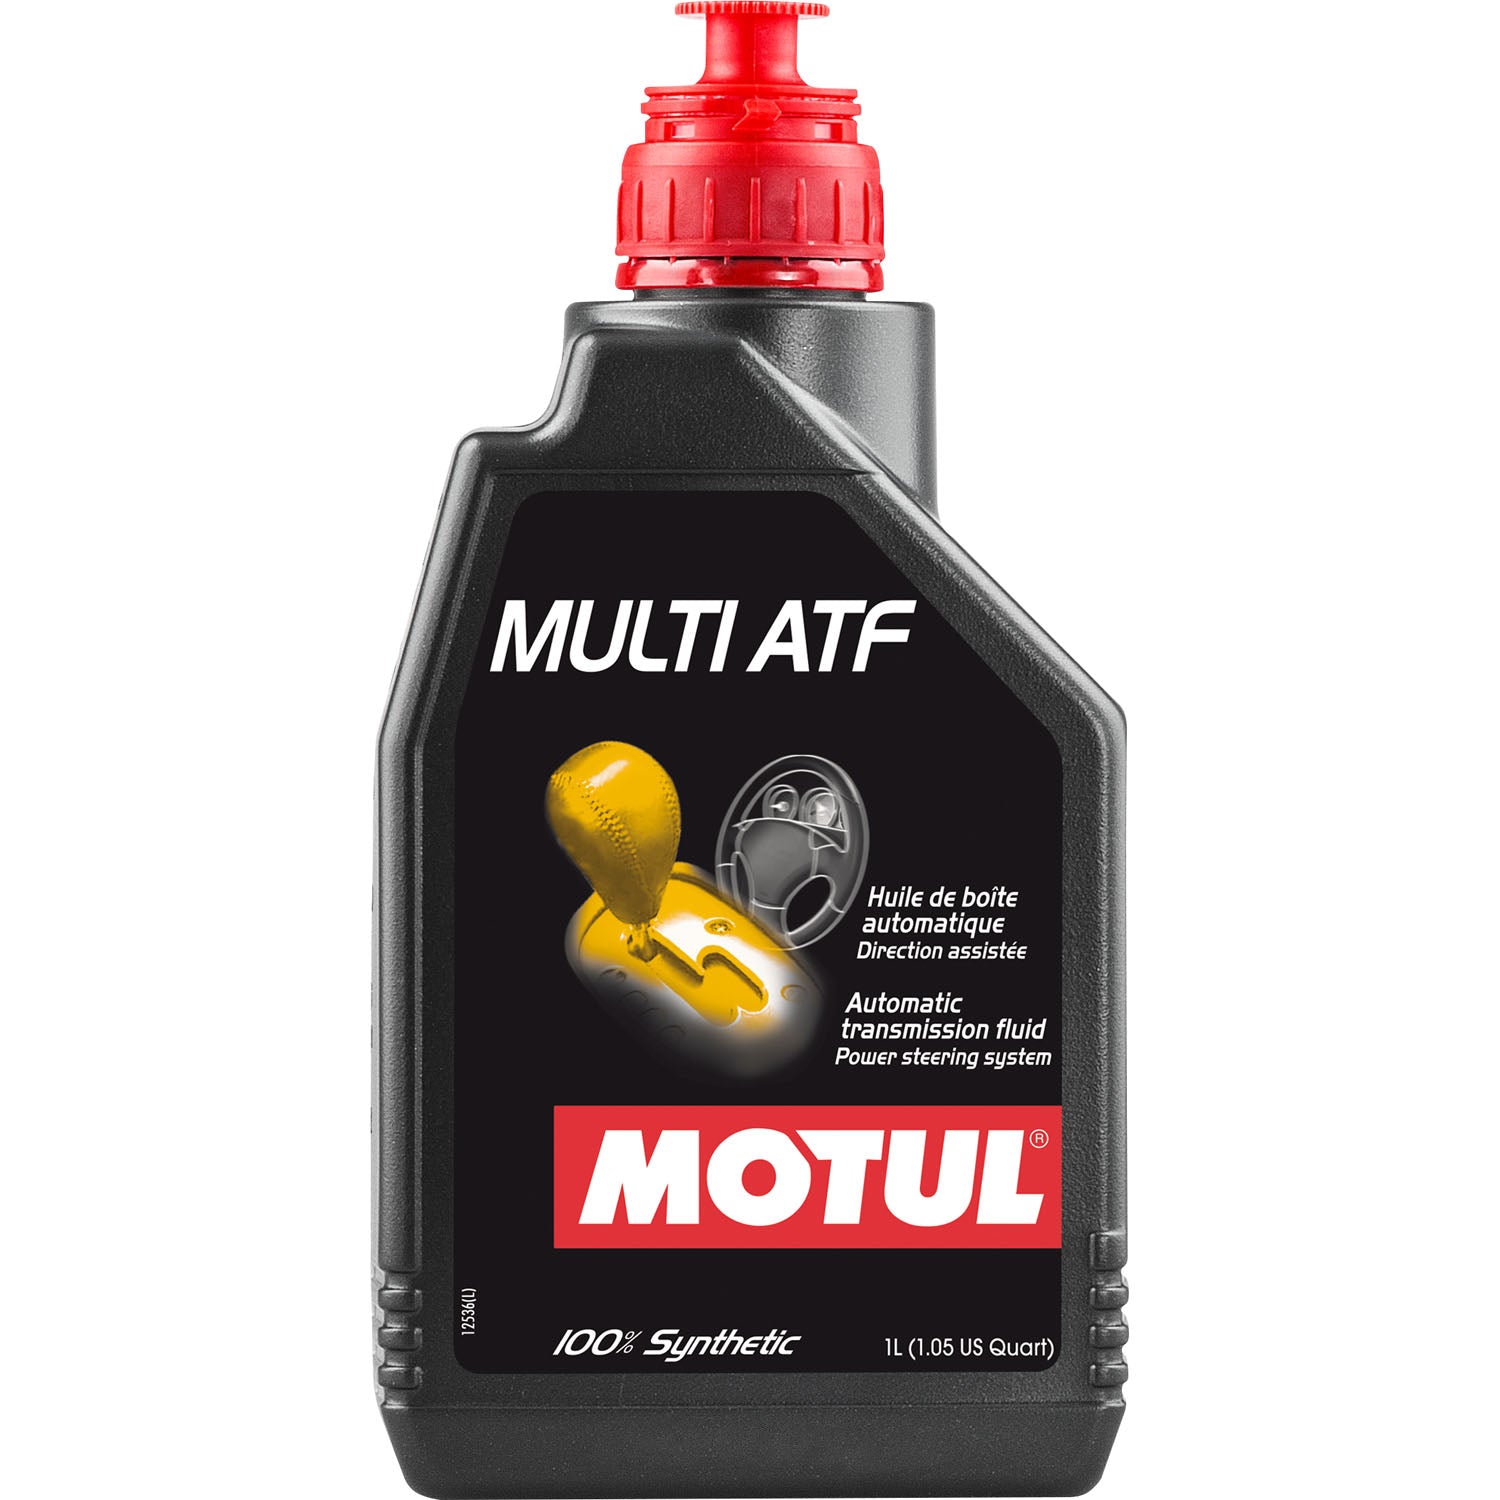 Motul Multi ATF Synthetic Automatic Transmission Fluid - 1 Liter